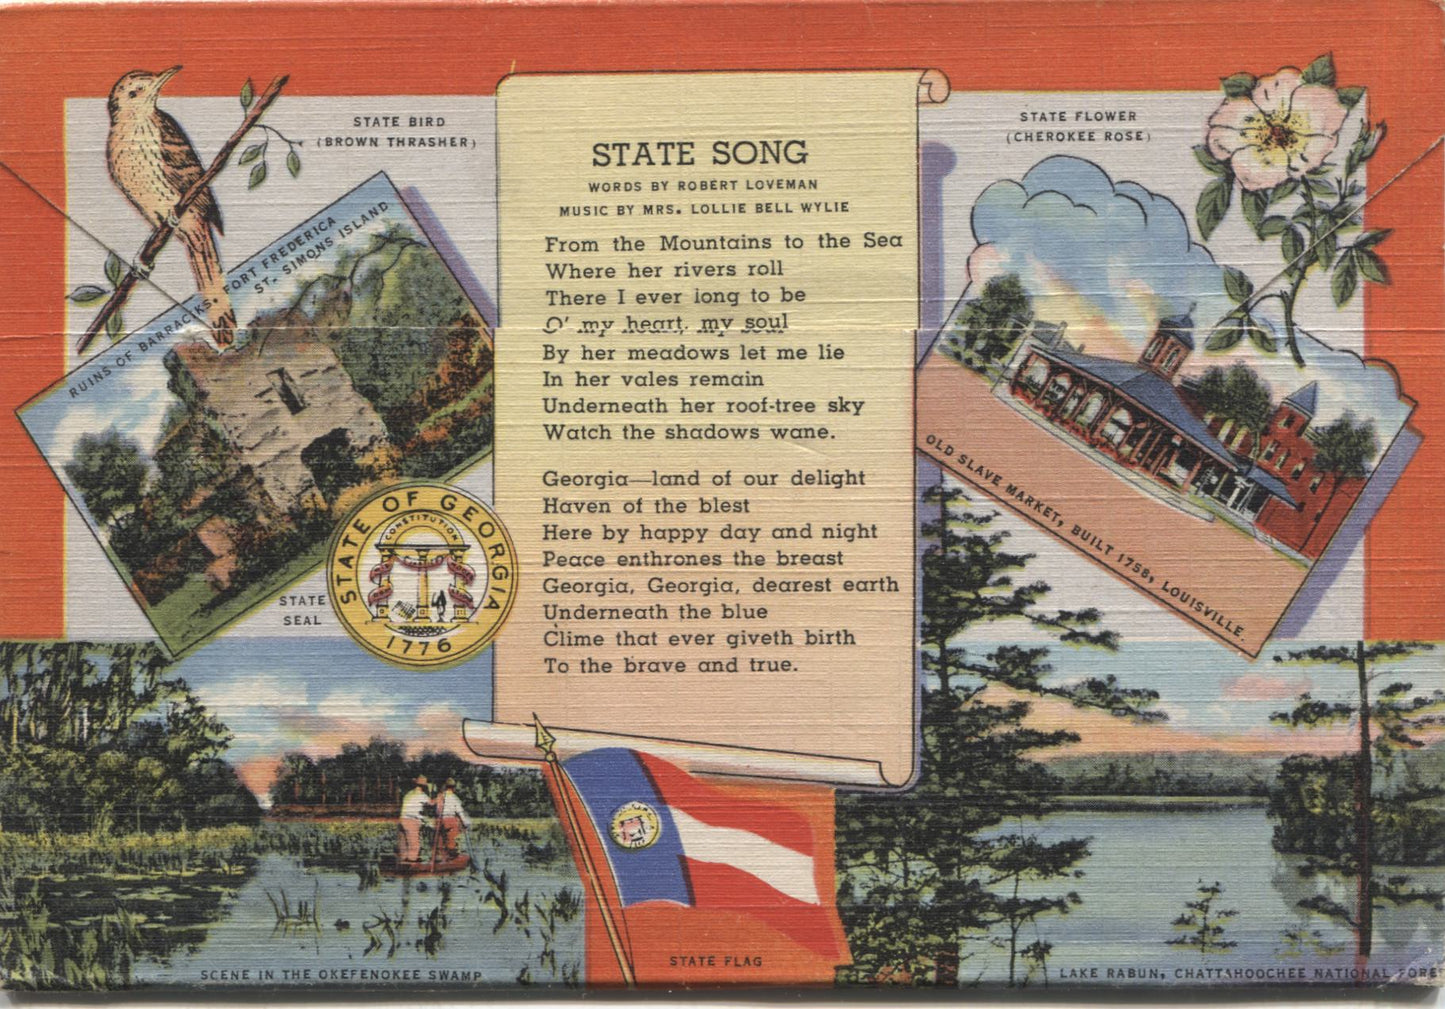 Georgia "The Empire State of the South" Vintage Souvenir Postcard Folder